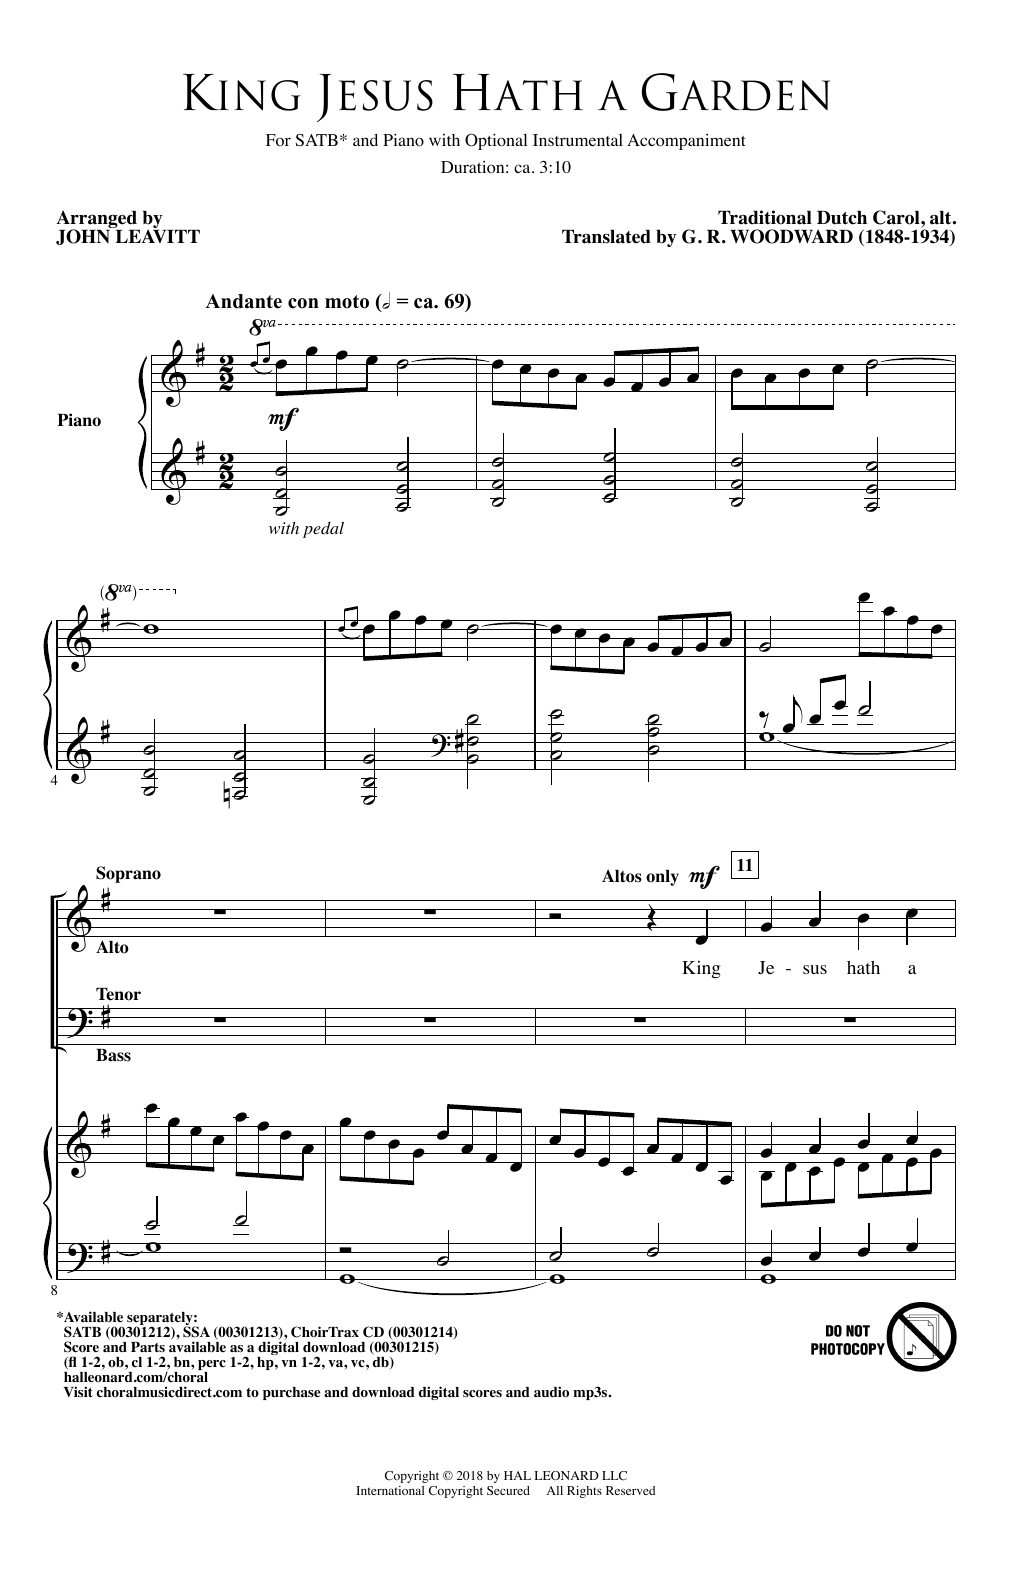 Download Traditional Dutch Carol King Jesus Hath A Garden (arr. John Leavitt) Sheet Music and learn how to play SSA Choir PDF digital score in minutes